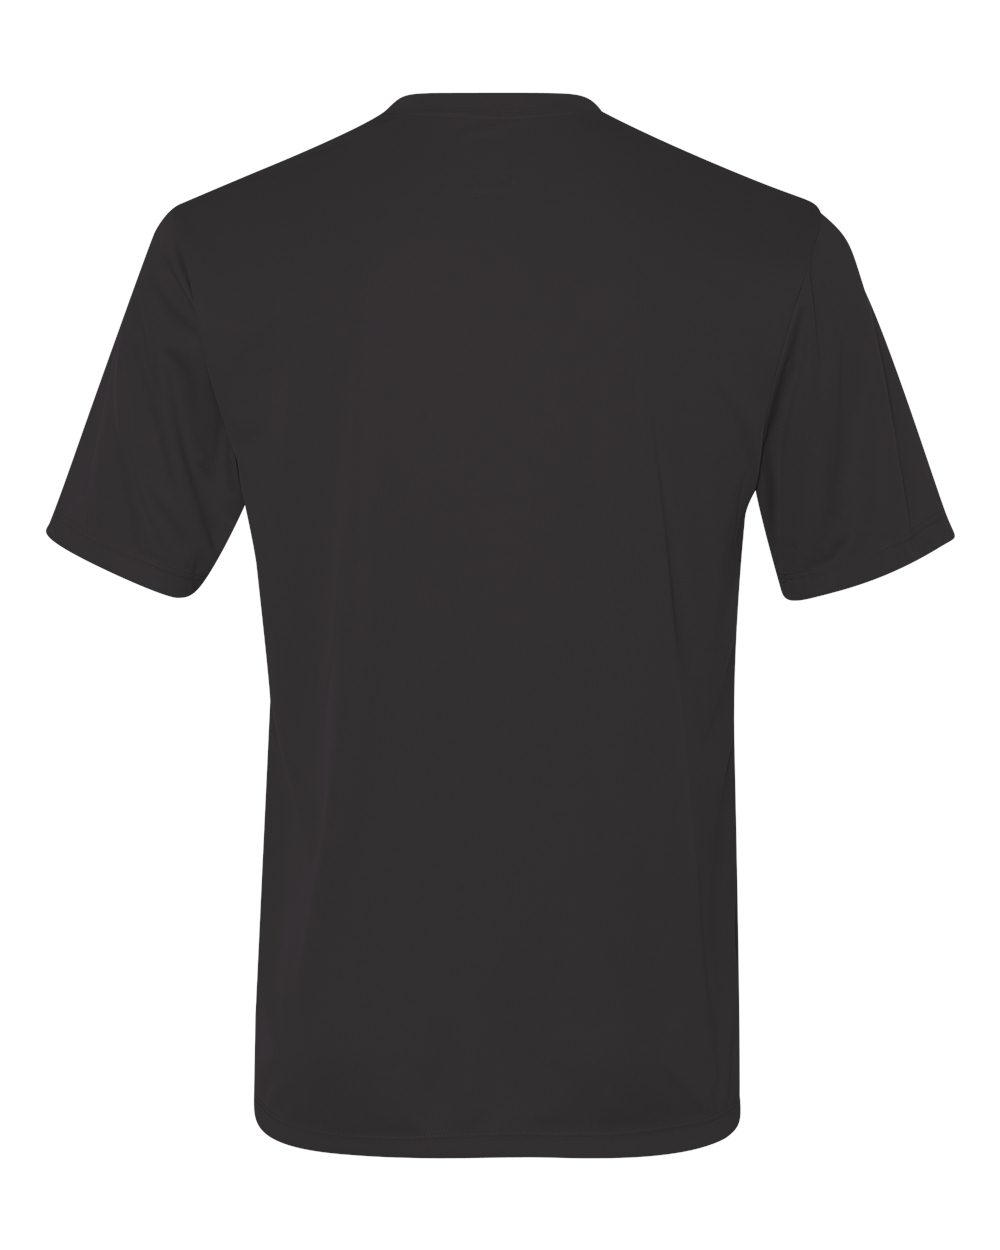 Hanes Cool Dri Mens Blank Performance Short Sleeve T Shirt 4820 up to ...